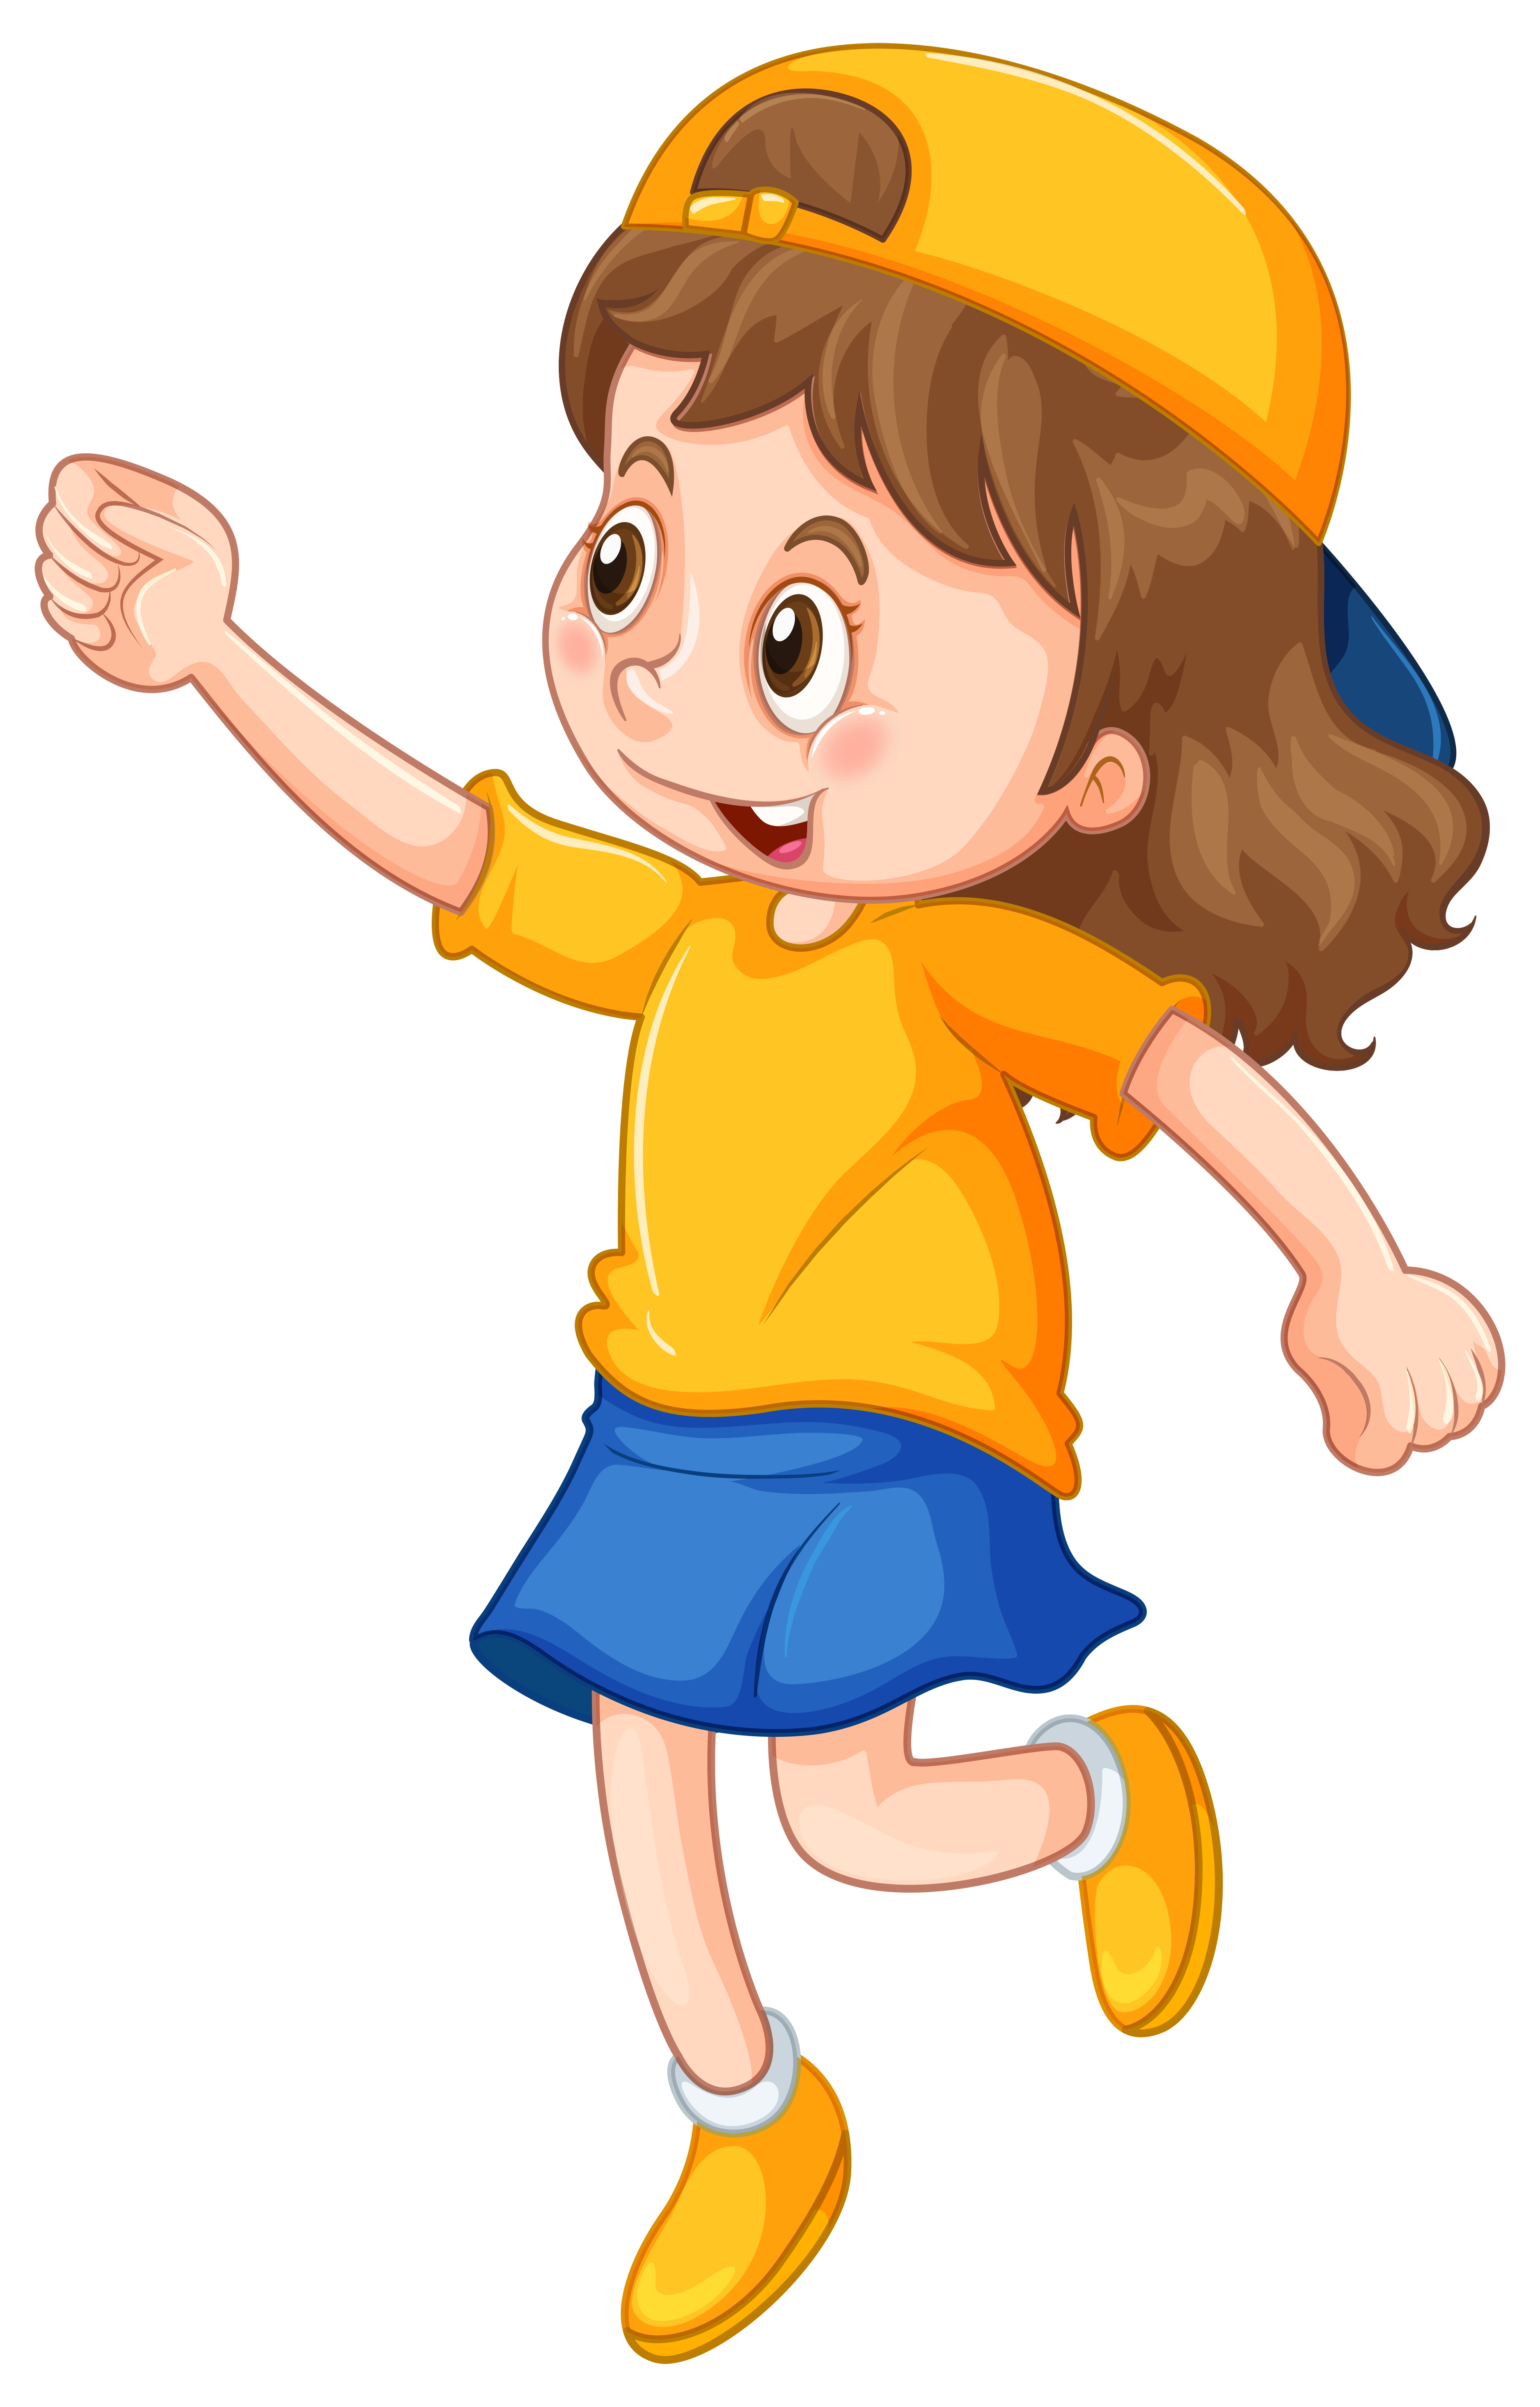 Girl in yellow shirt and hat 413486 Download Free Vectors Clipart Graphics & Vector Art